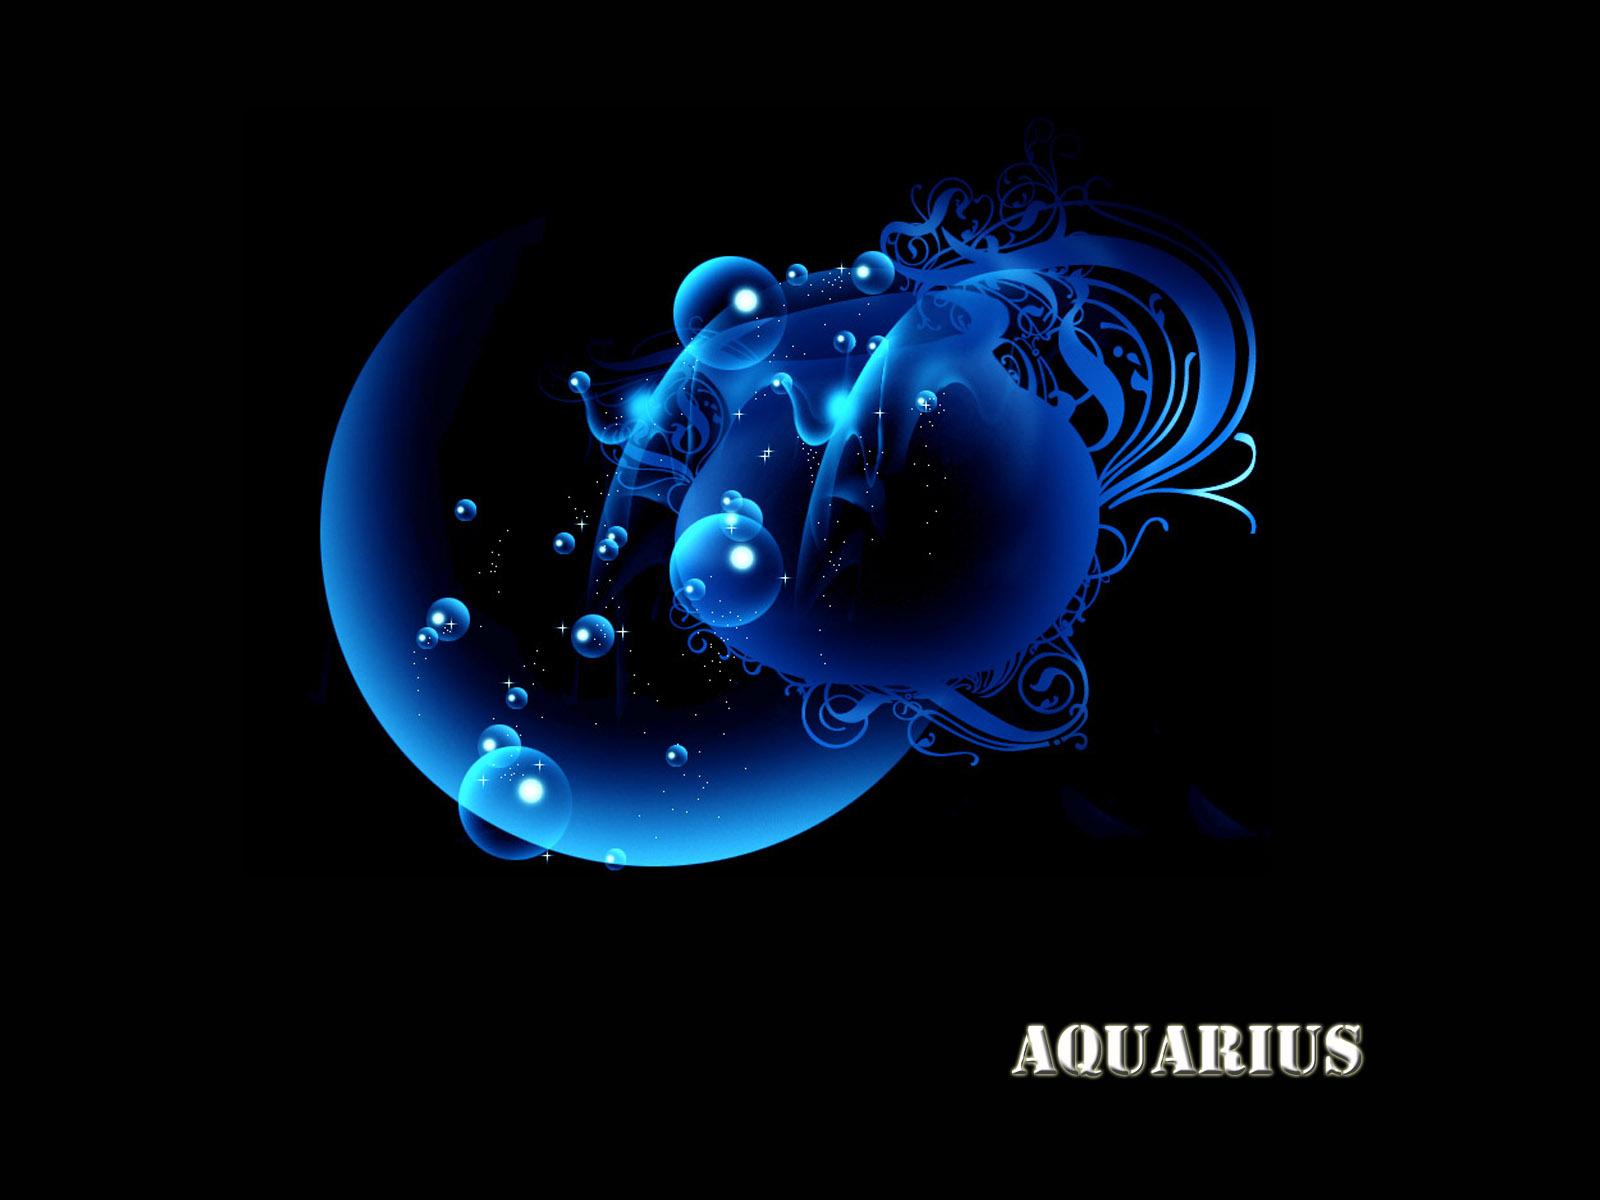 Free download Aquarius Stock Images Royalty Free Images Vectors